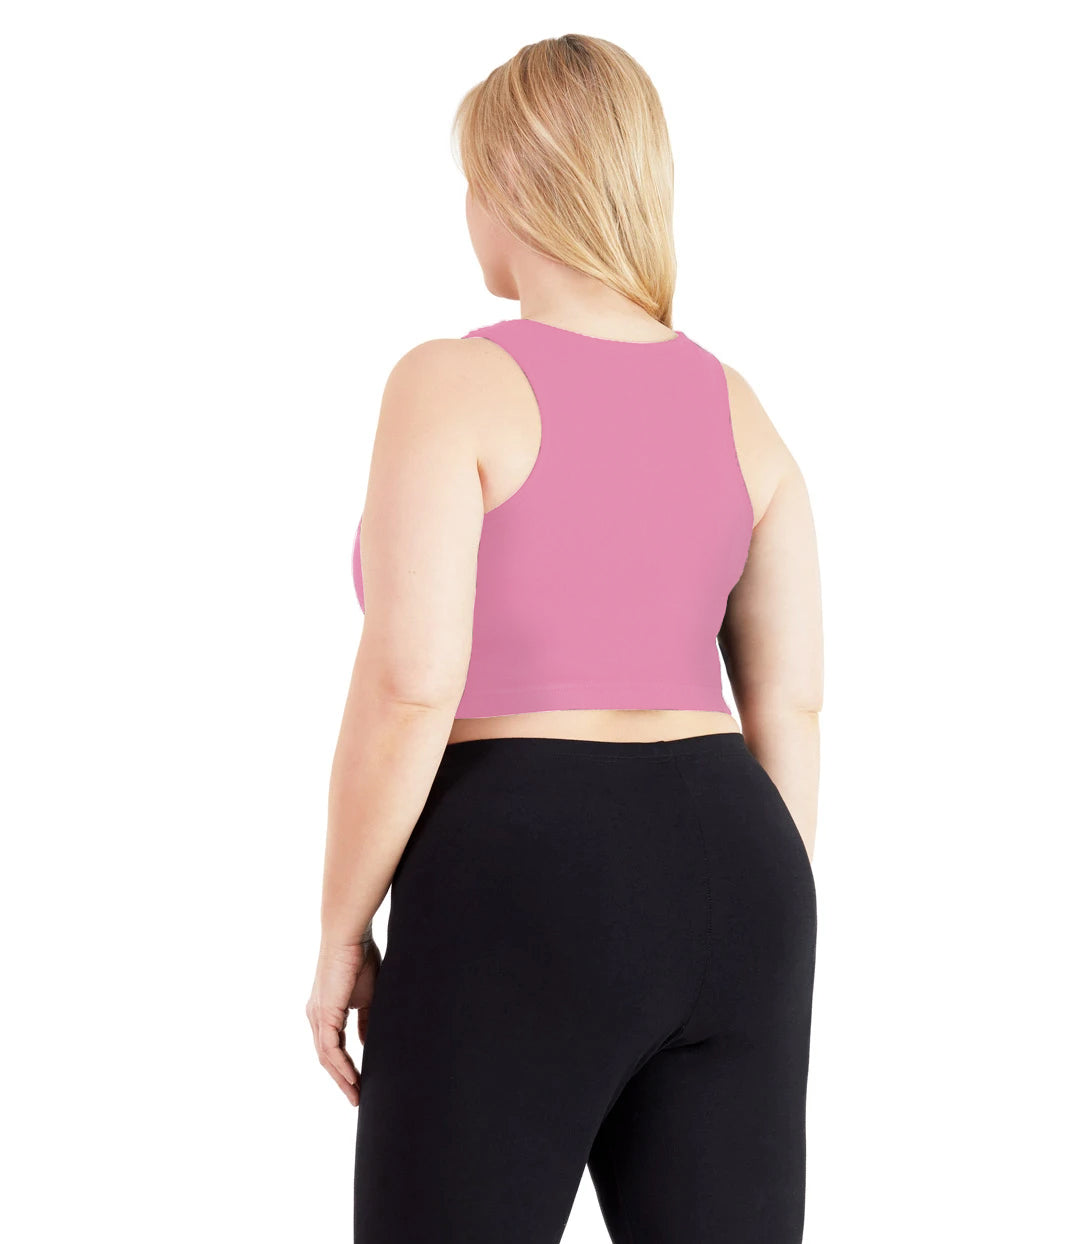 Plus size woman, facing back, wearing JunoActive plus size UltraKnit V-Neck Bras in Strawberry. The woman is wearing a pair of Black JunoActive leggings.